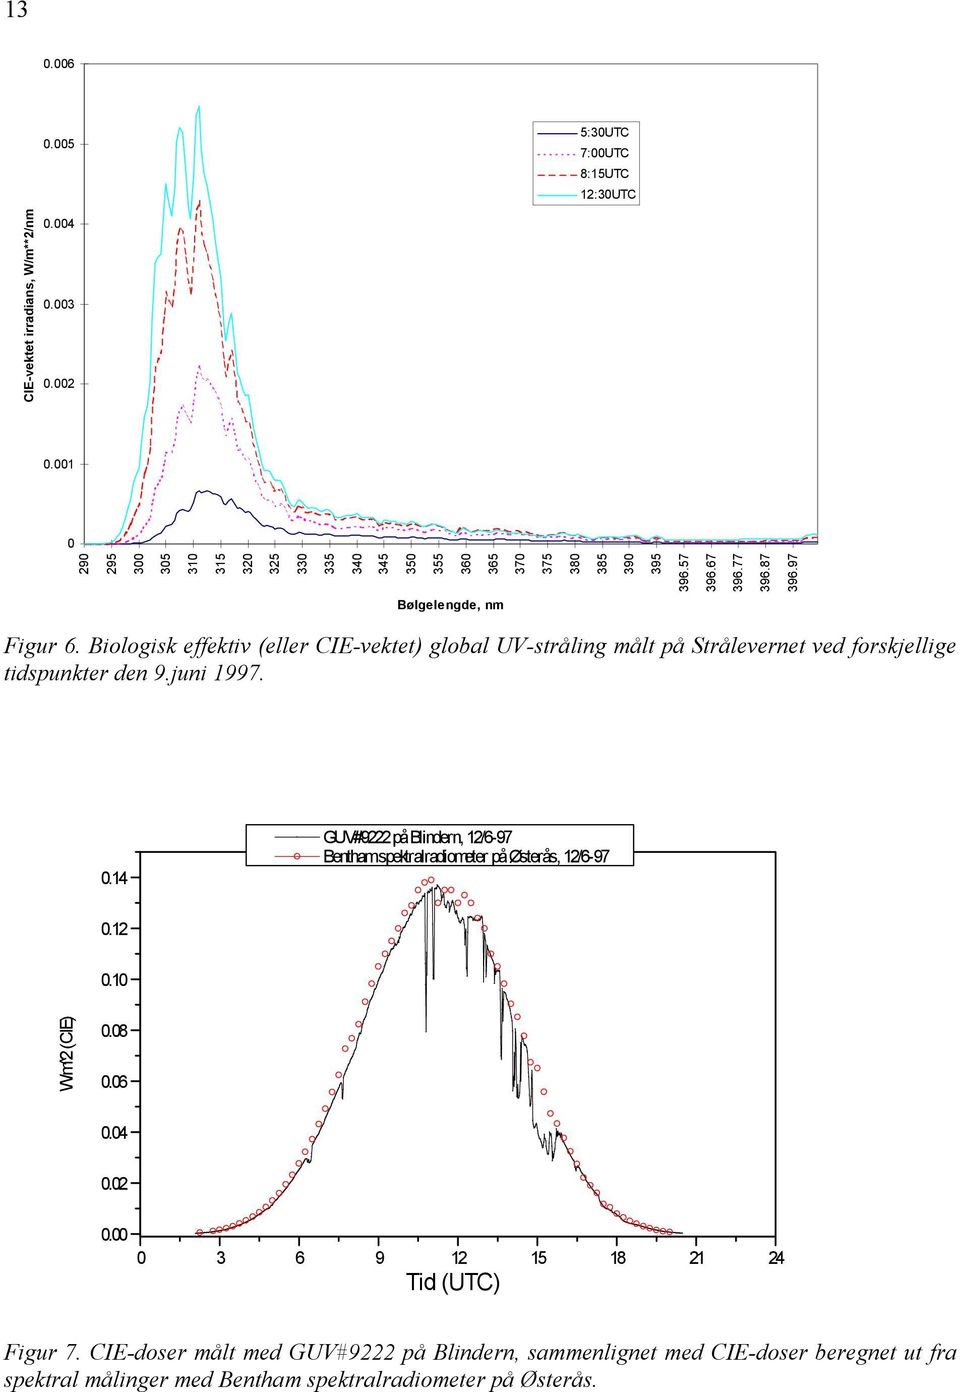 Biologisk effektiv (eller CIE-vektet) global UV-stråling målt på Strålevernet ved forskjellige tidspunkter den 9.juni 1997.